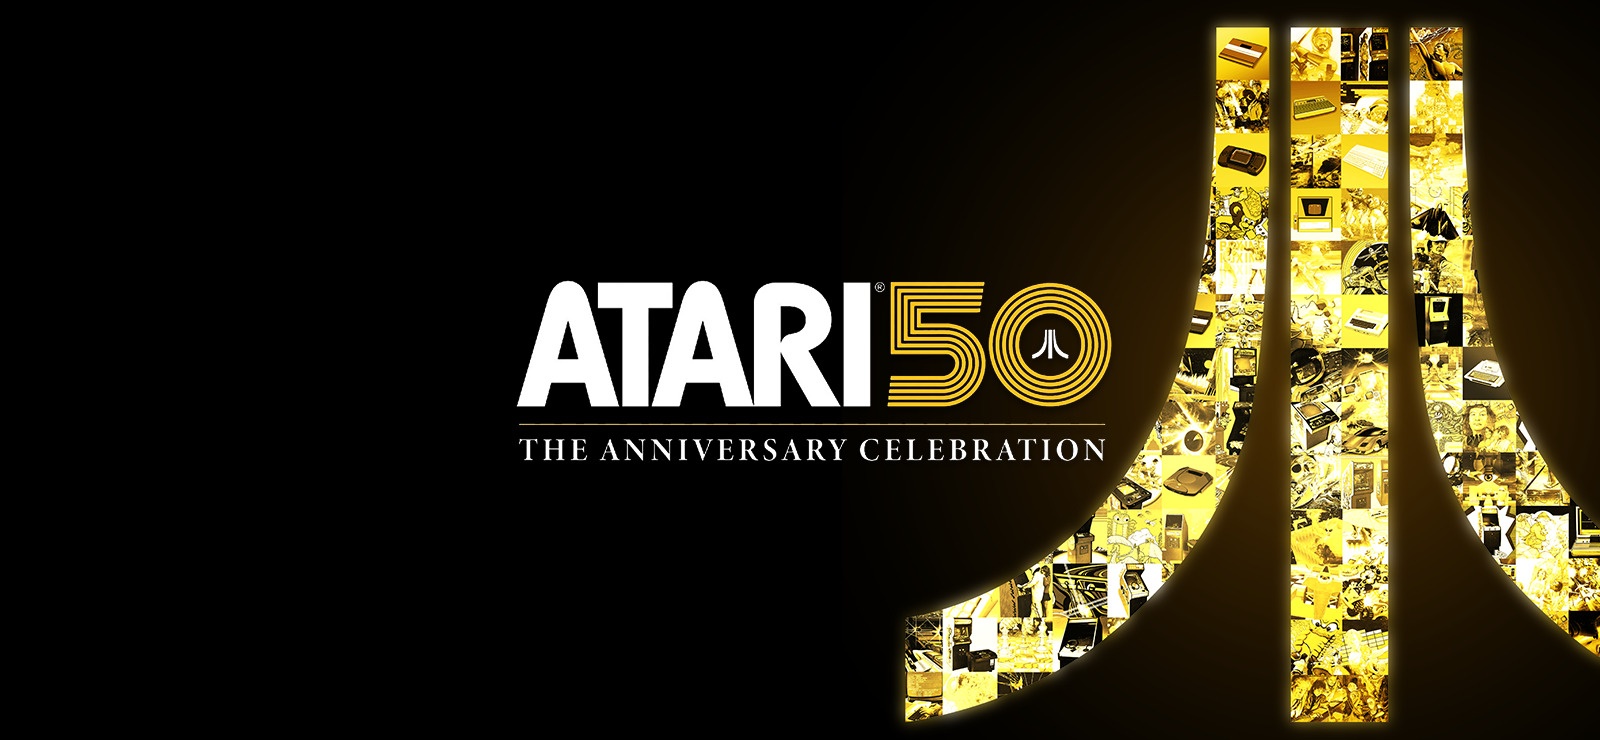 Digital Eclipse Creates Xbox One Paddle Adapter For Atari 50: The  Anniversary Celebration